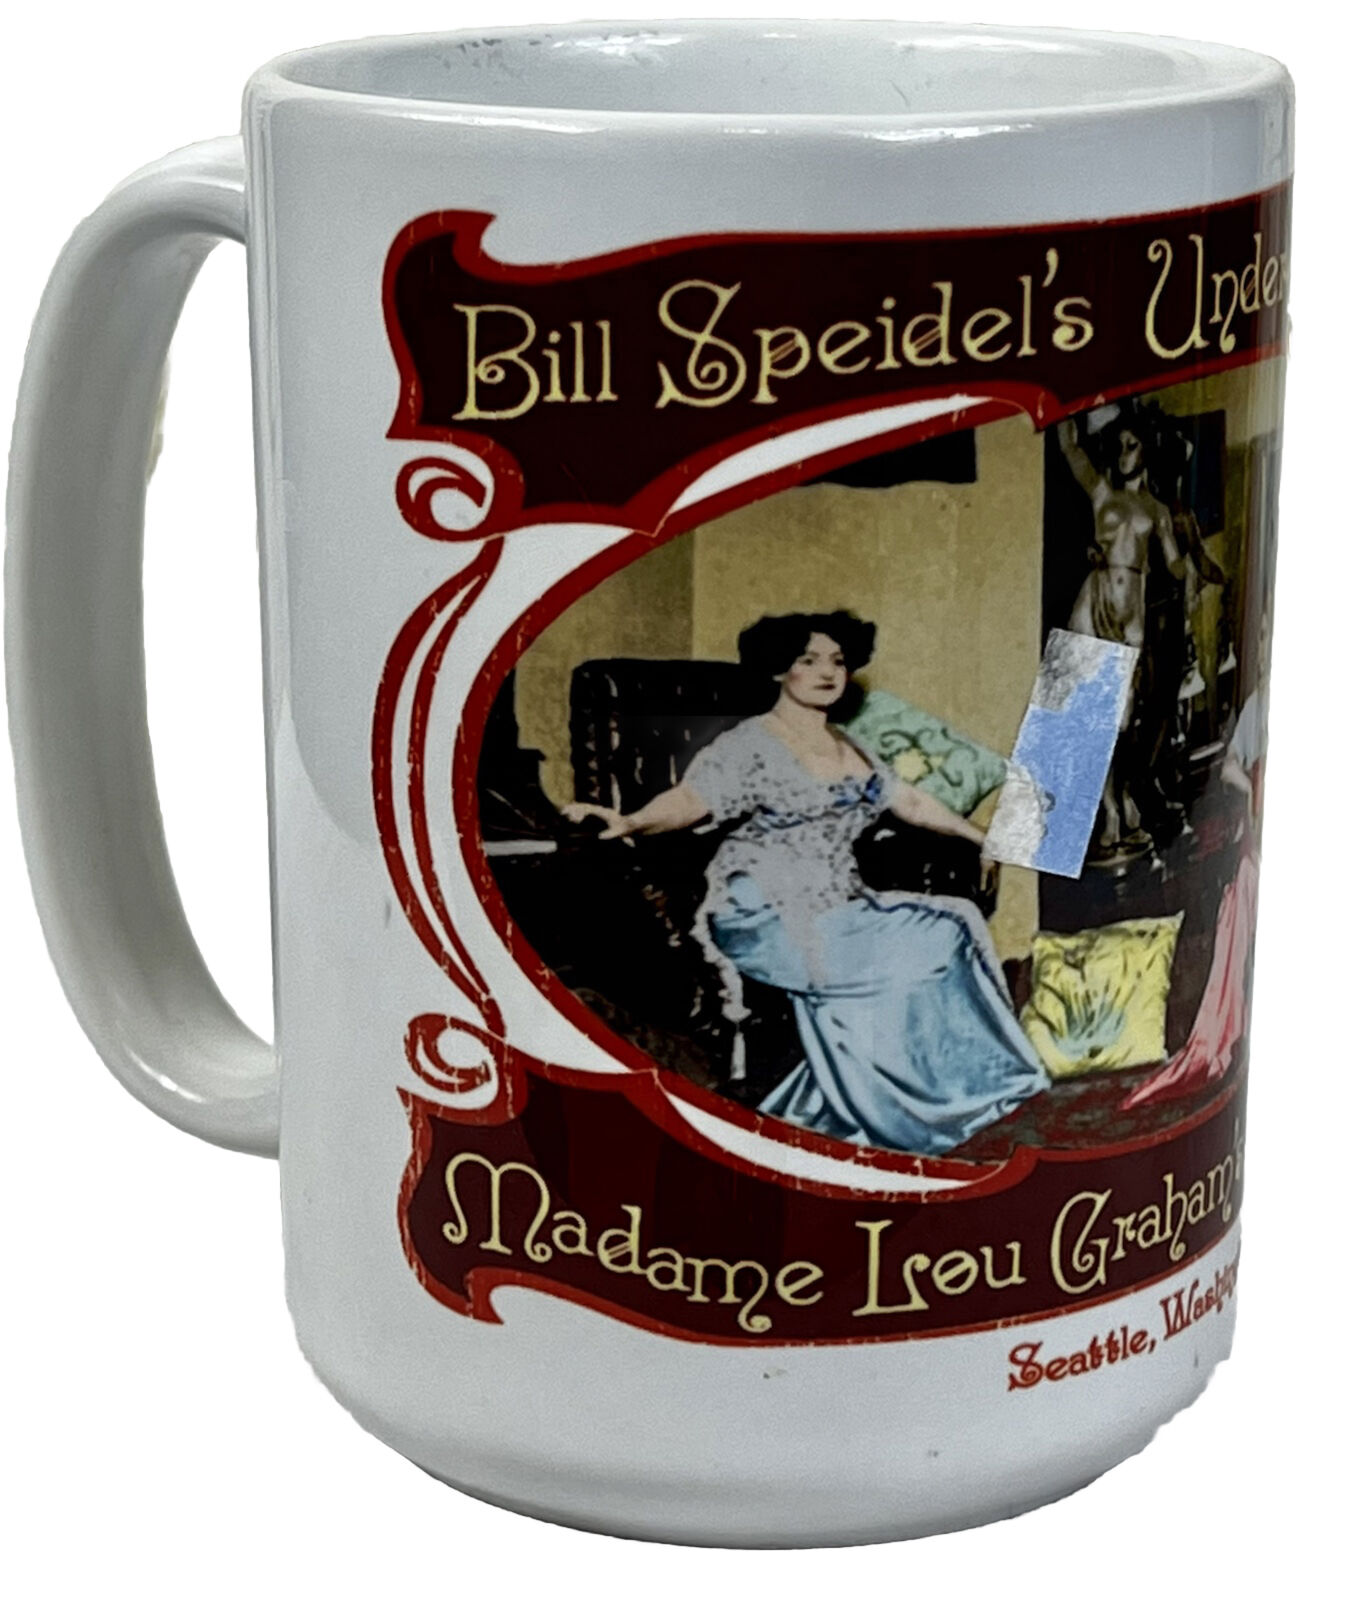 Bill Speidel's Underground Tour Seattle Coffee Mug- Underground Tours Madame Lou